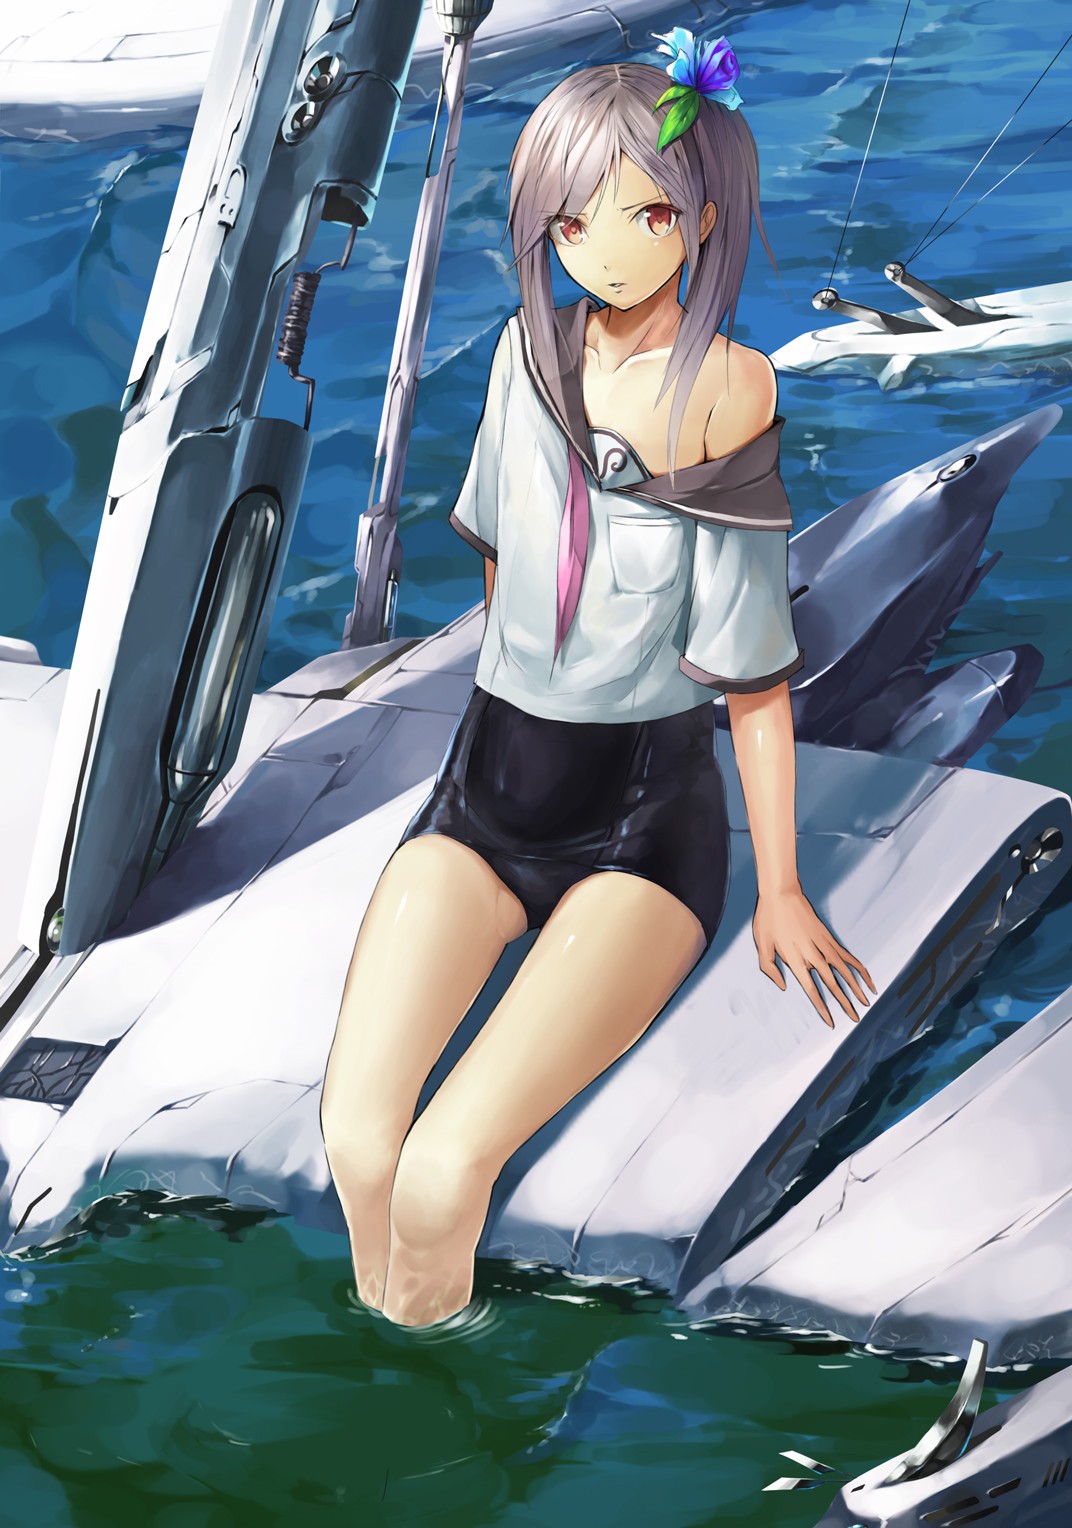 Wallpaper anime girls short hair vehicle boating surfing